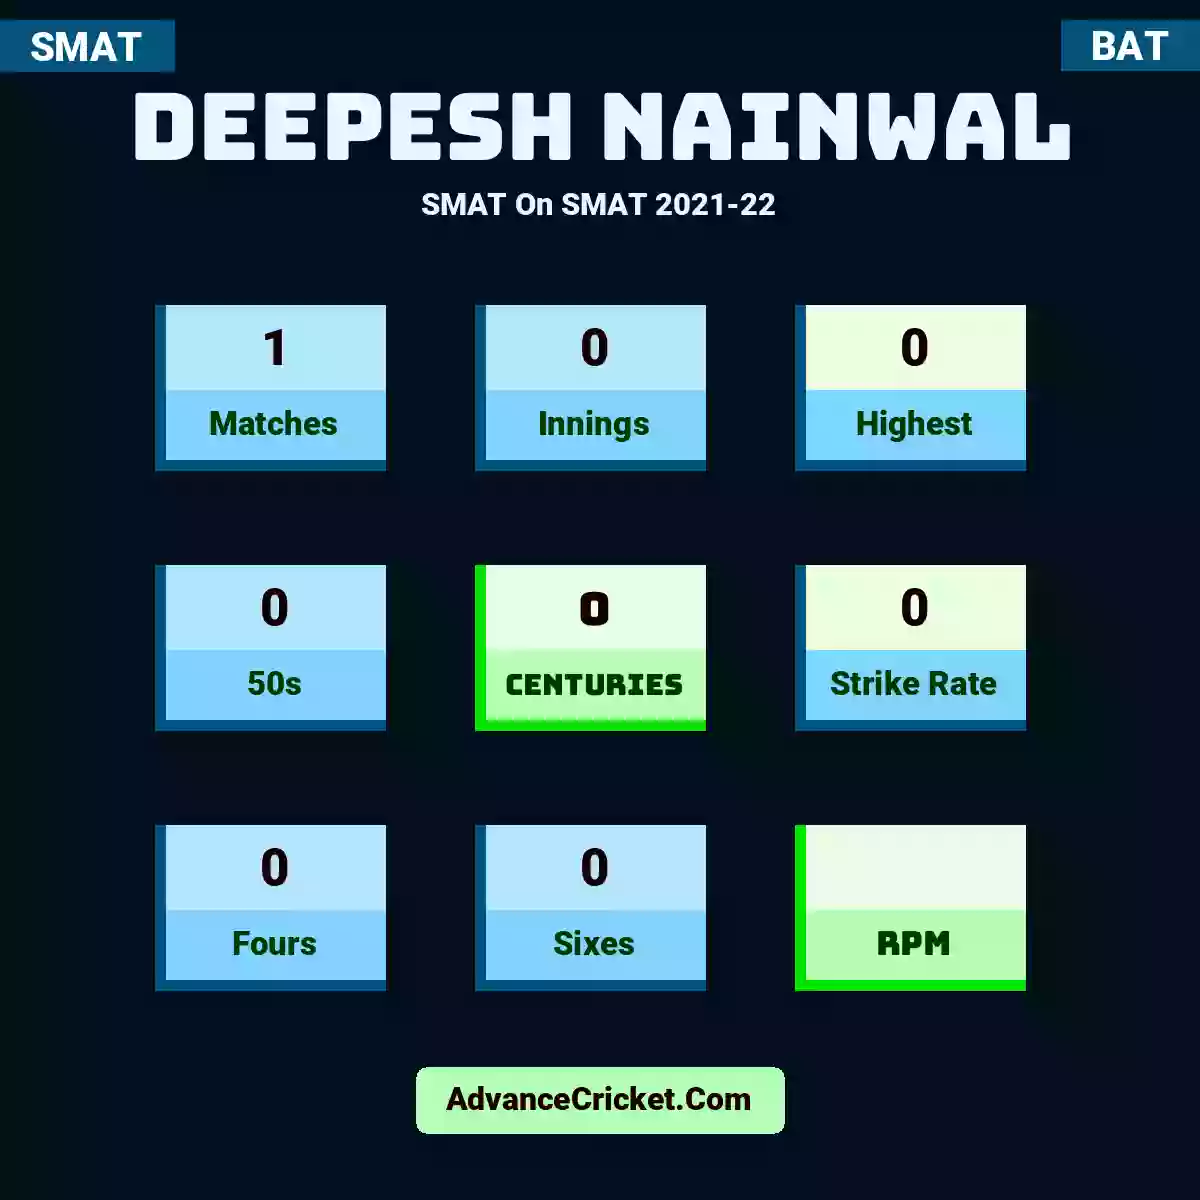 Deepesh Nainwal SMAT  On SMAT 2021-22, Deepesh Nainwal played 1 matches, scored 0 runs as highest, 0 half-centuries, and 0 centuries, with a strike rate of 0. D.Nainwal hit 0 fours and 0 sixes.